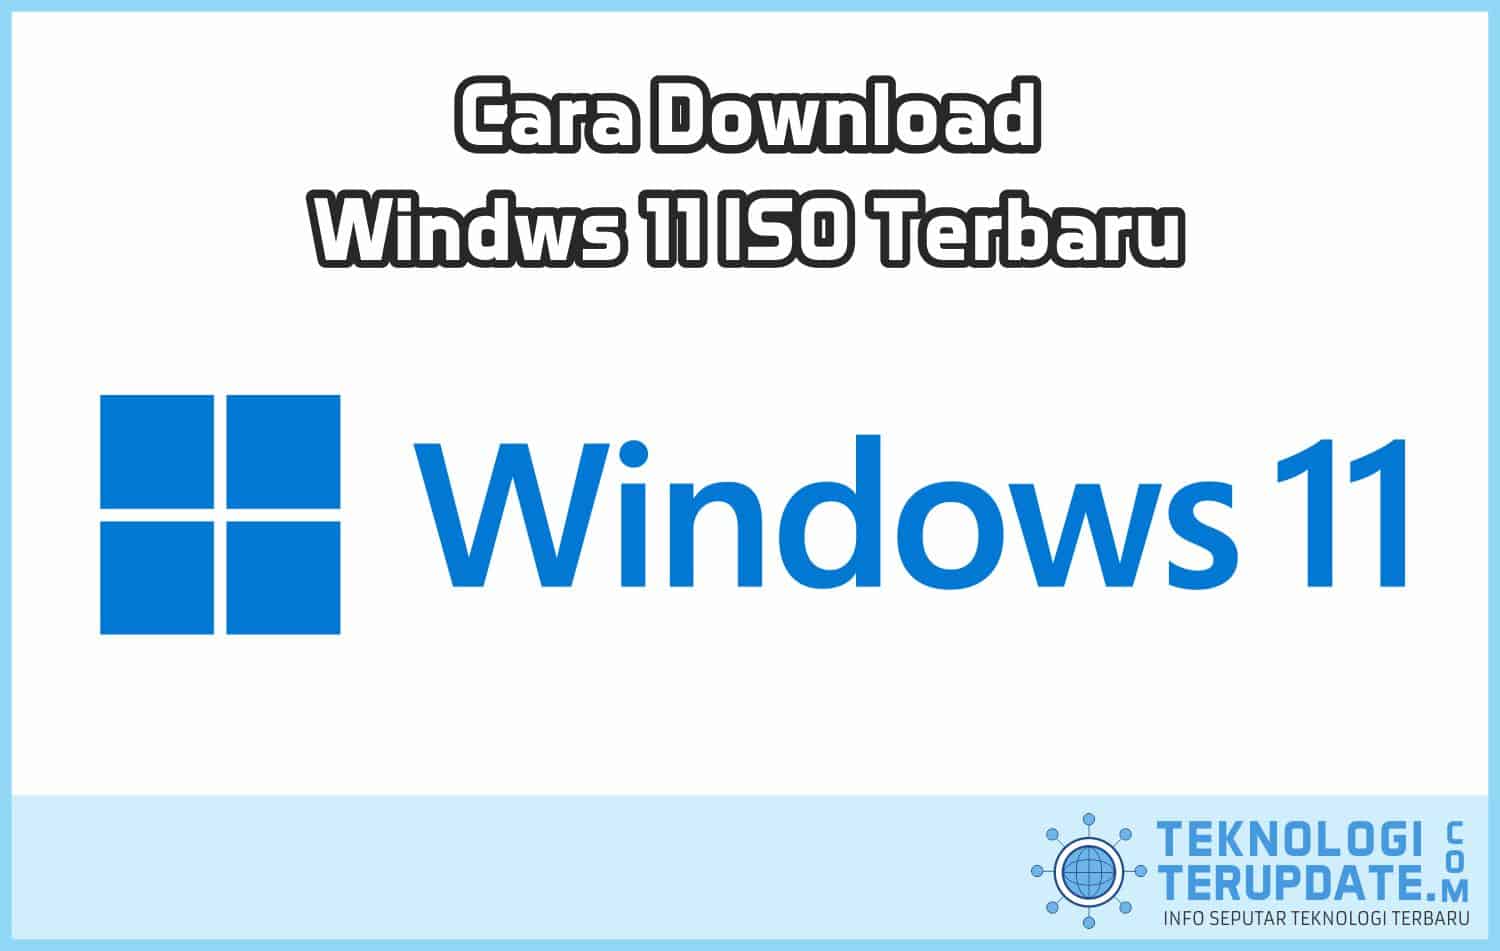 Cara Download Windows 11 ISO